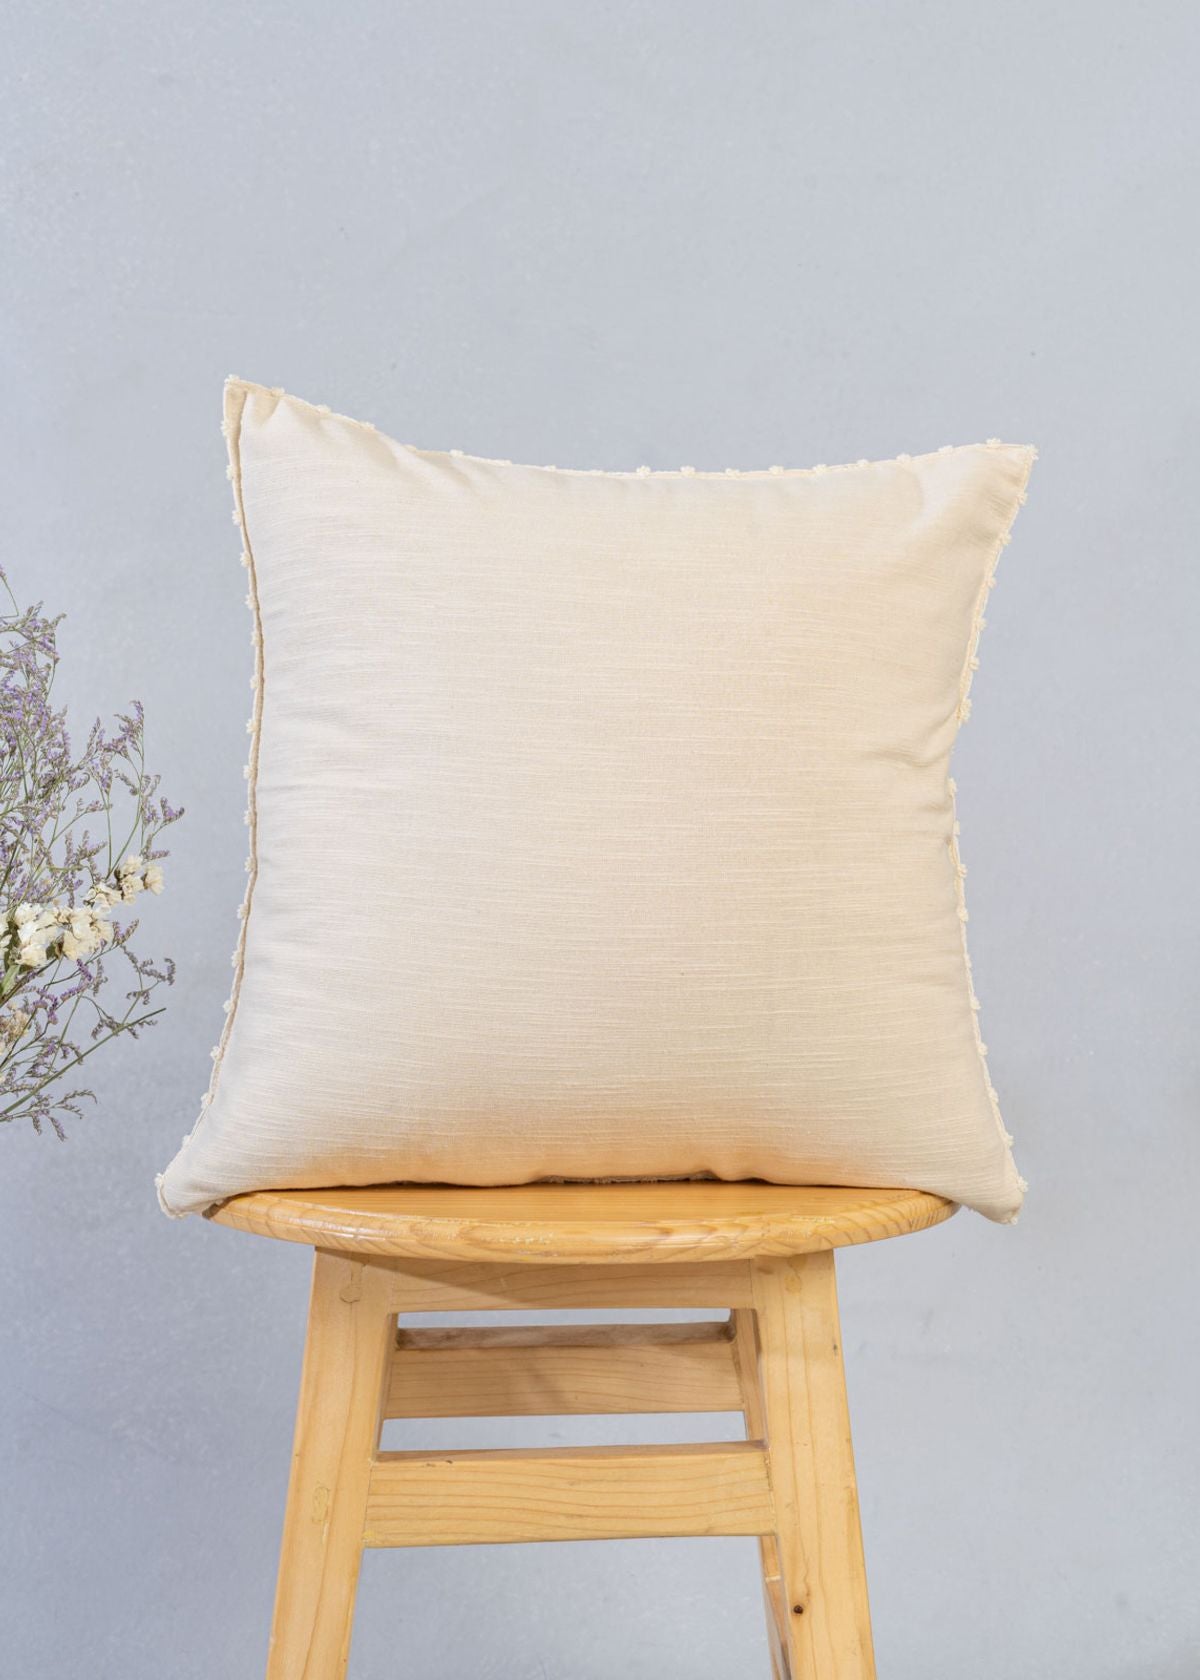 Solid Cream 100% cotton plain cushion cover for sofa